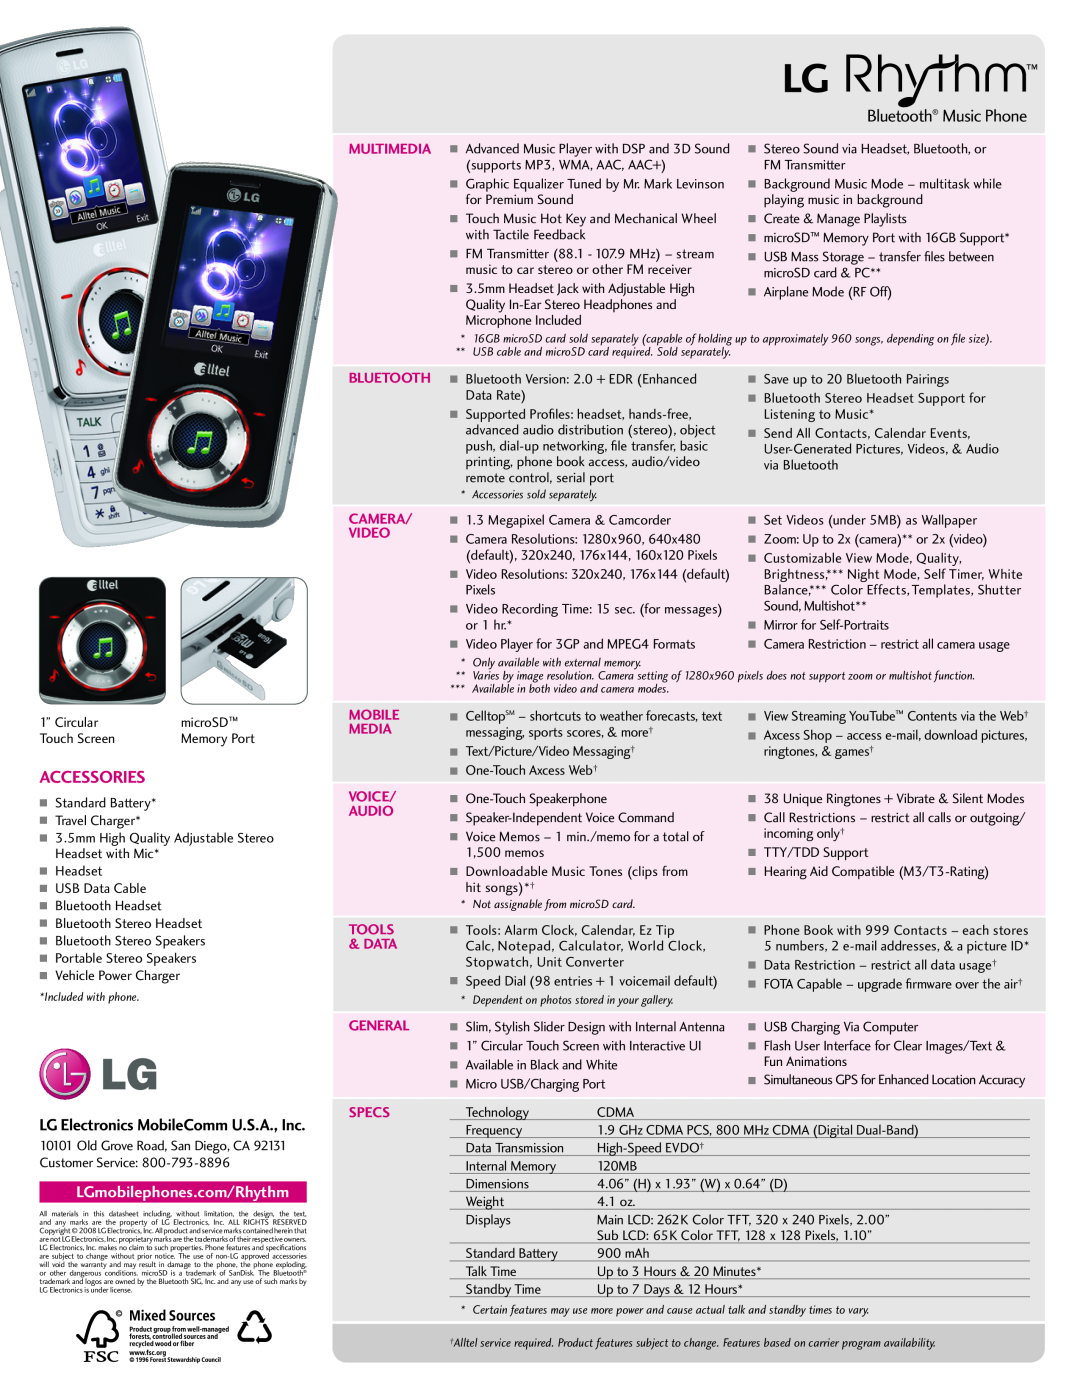 LG Electronics Bluetooth Music Phone, Accessories, LG Electronics MobileComm U.S.A., Inc, LGmobilephones.com/Rhythm 